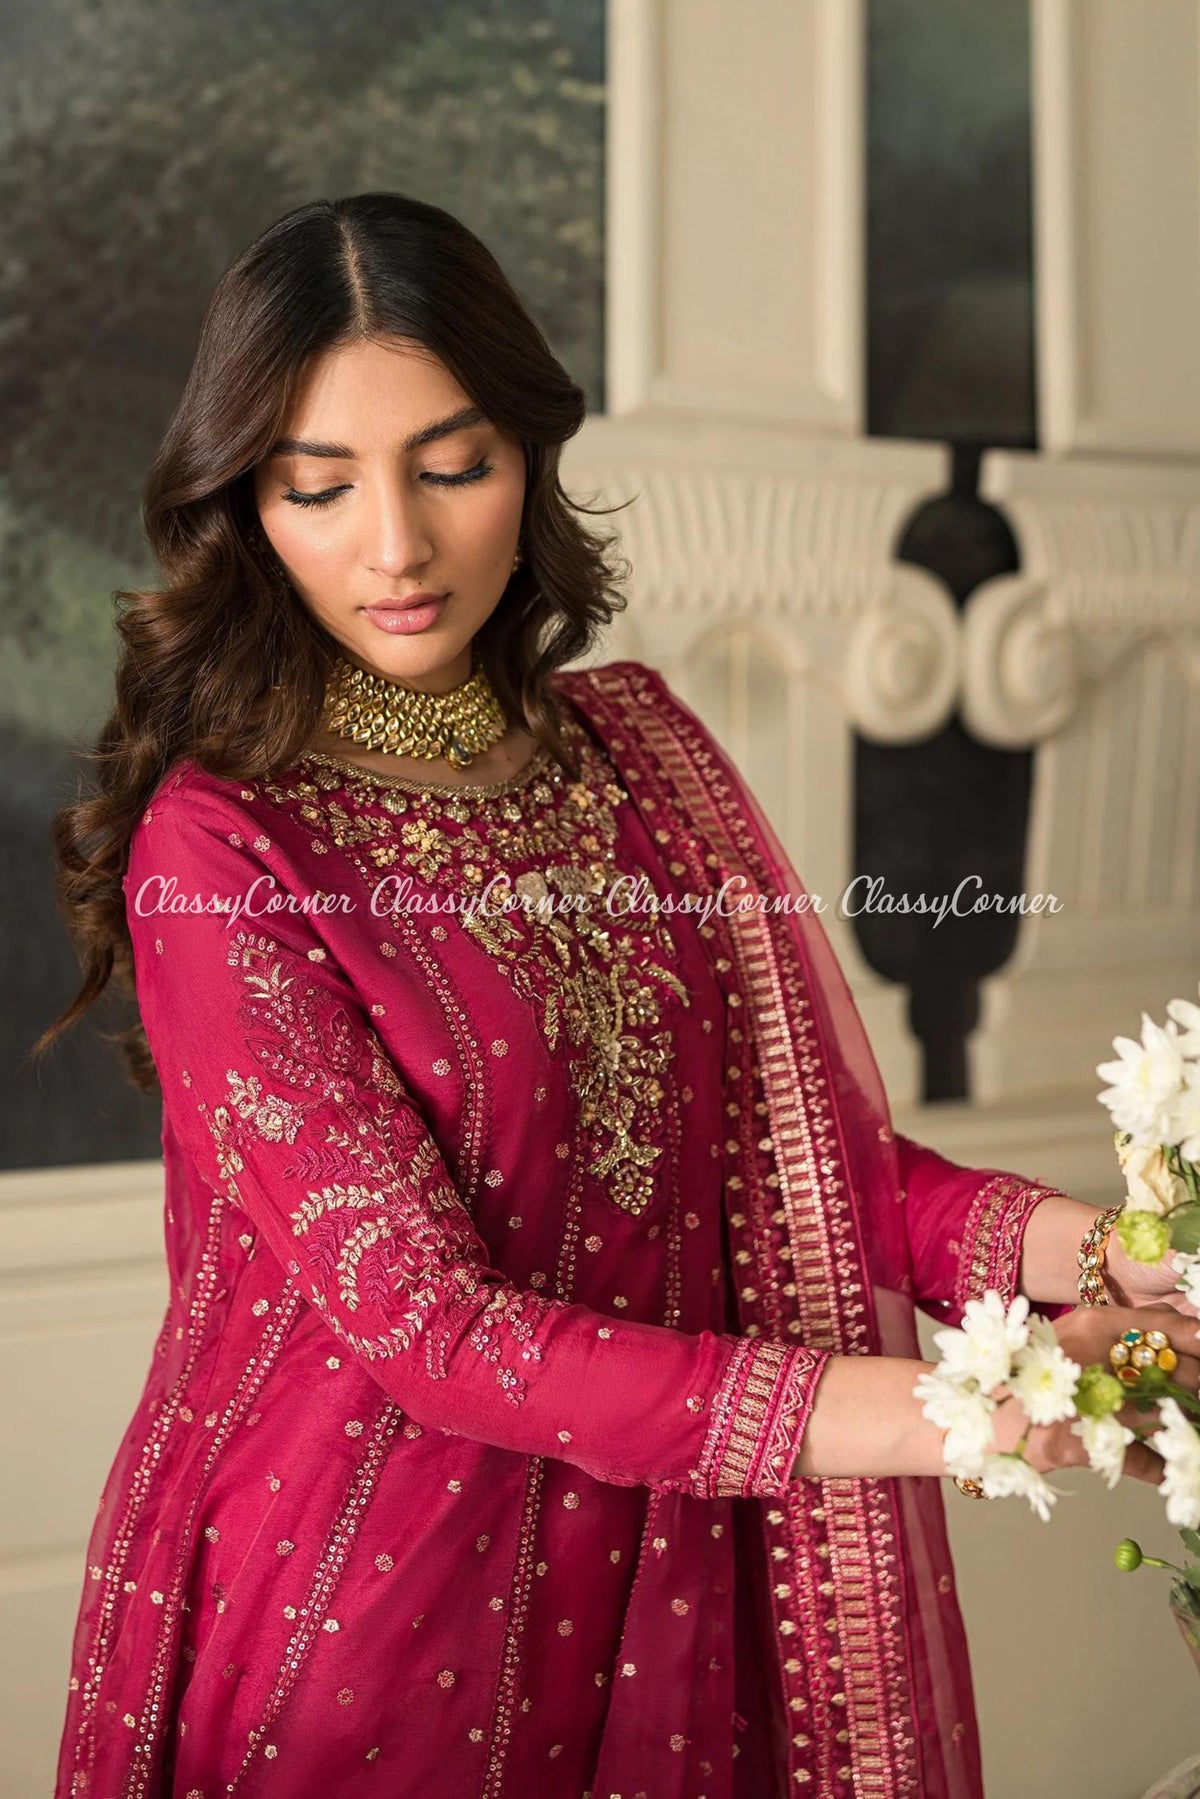 Traditional Pakistani wedding attire